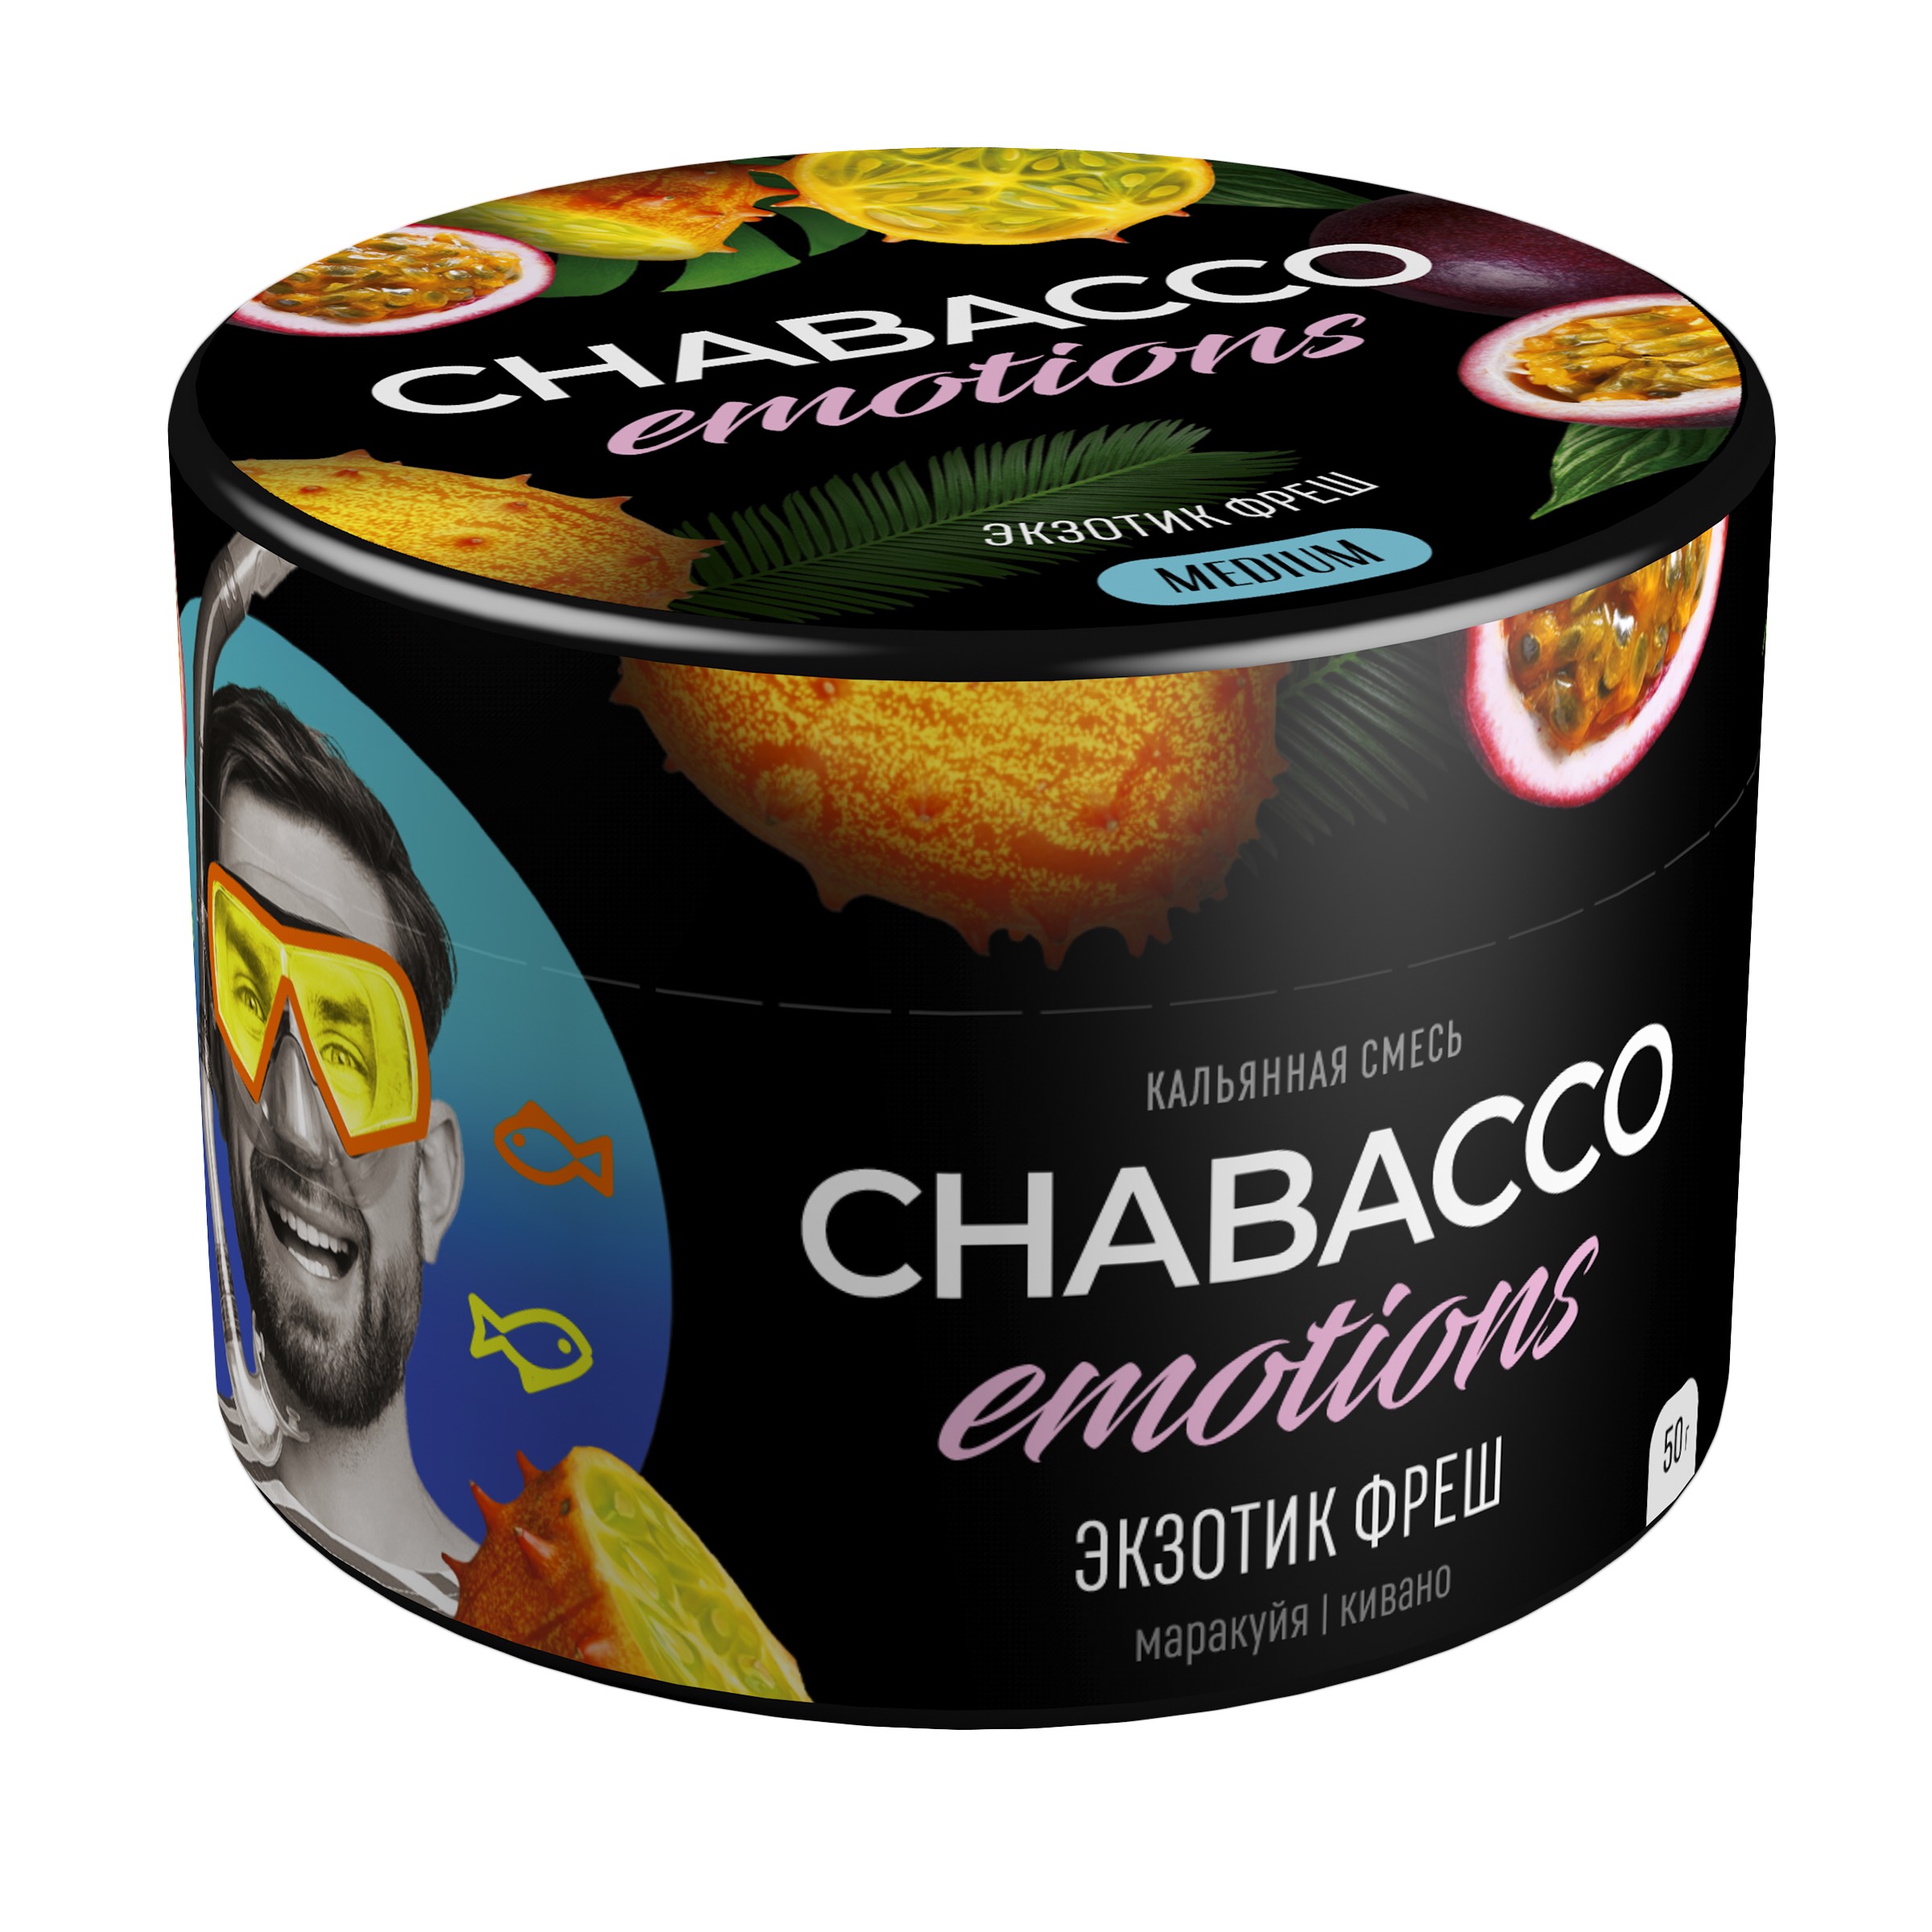 Chabacco - Emotions - Exotic fresh - 50 g